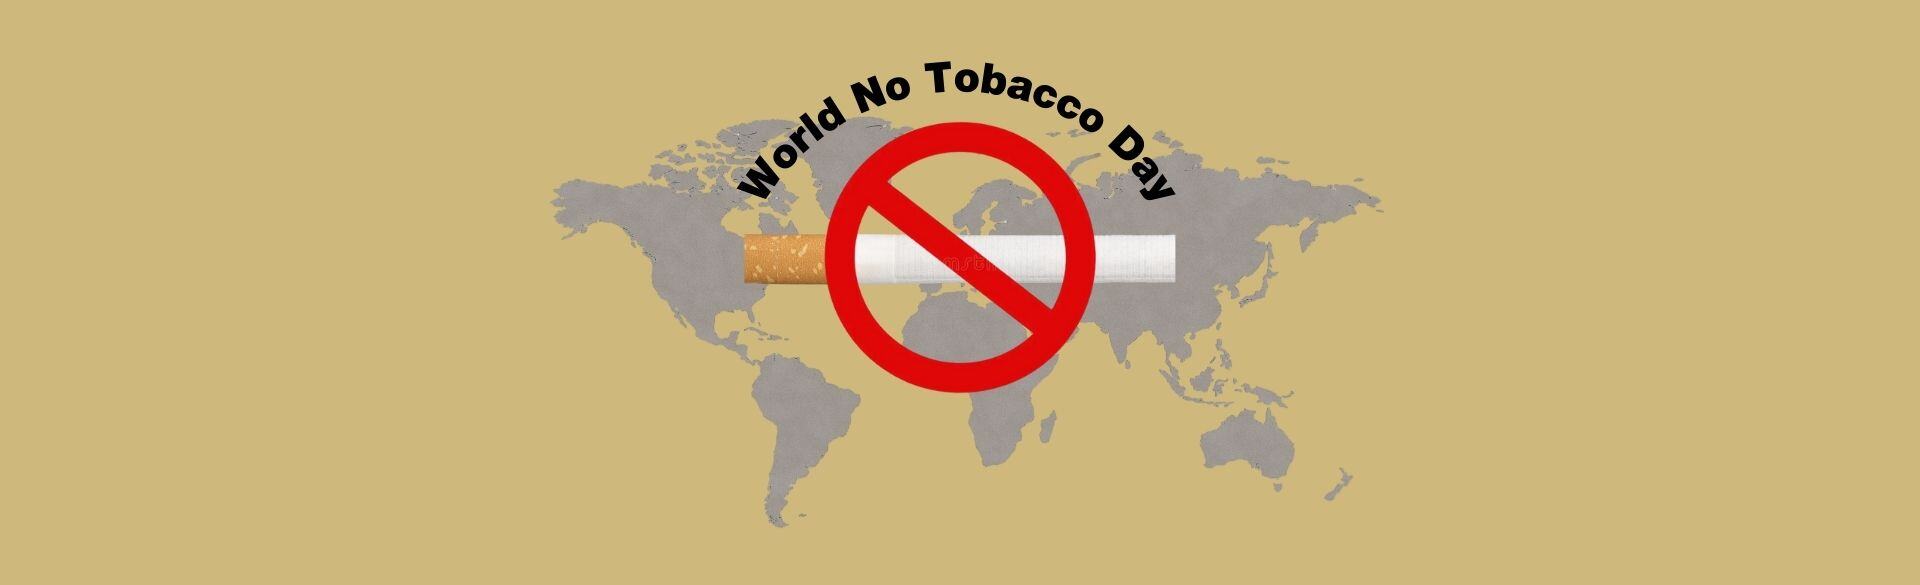 World No Tobacco Day | University of Colorado Cancer Center